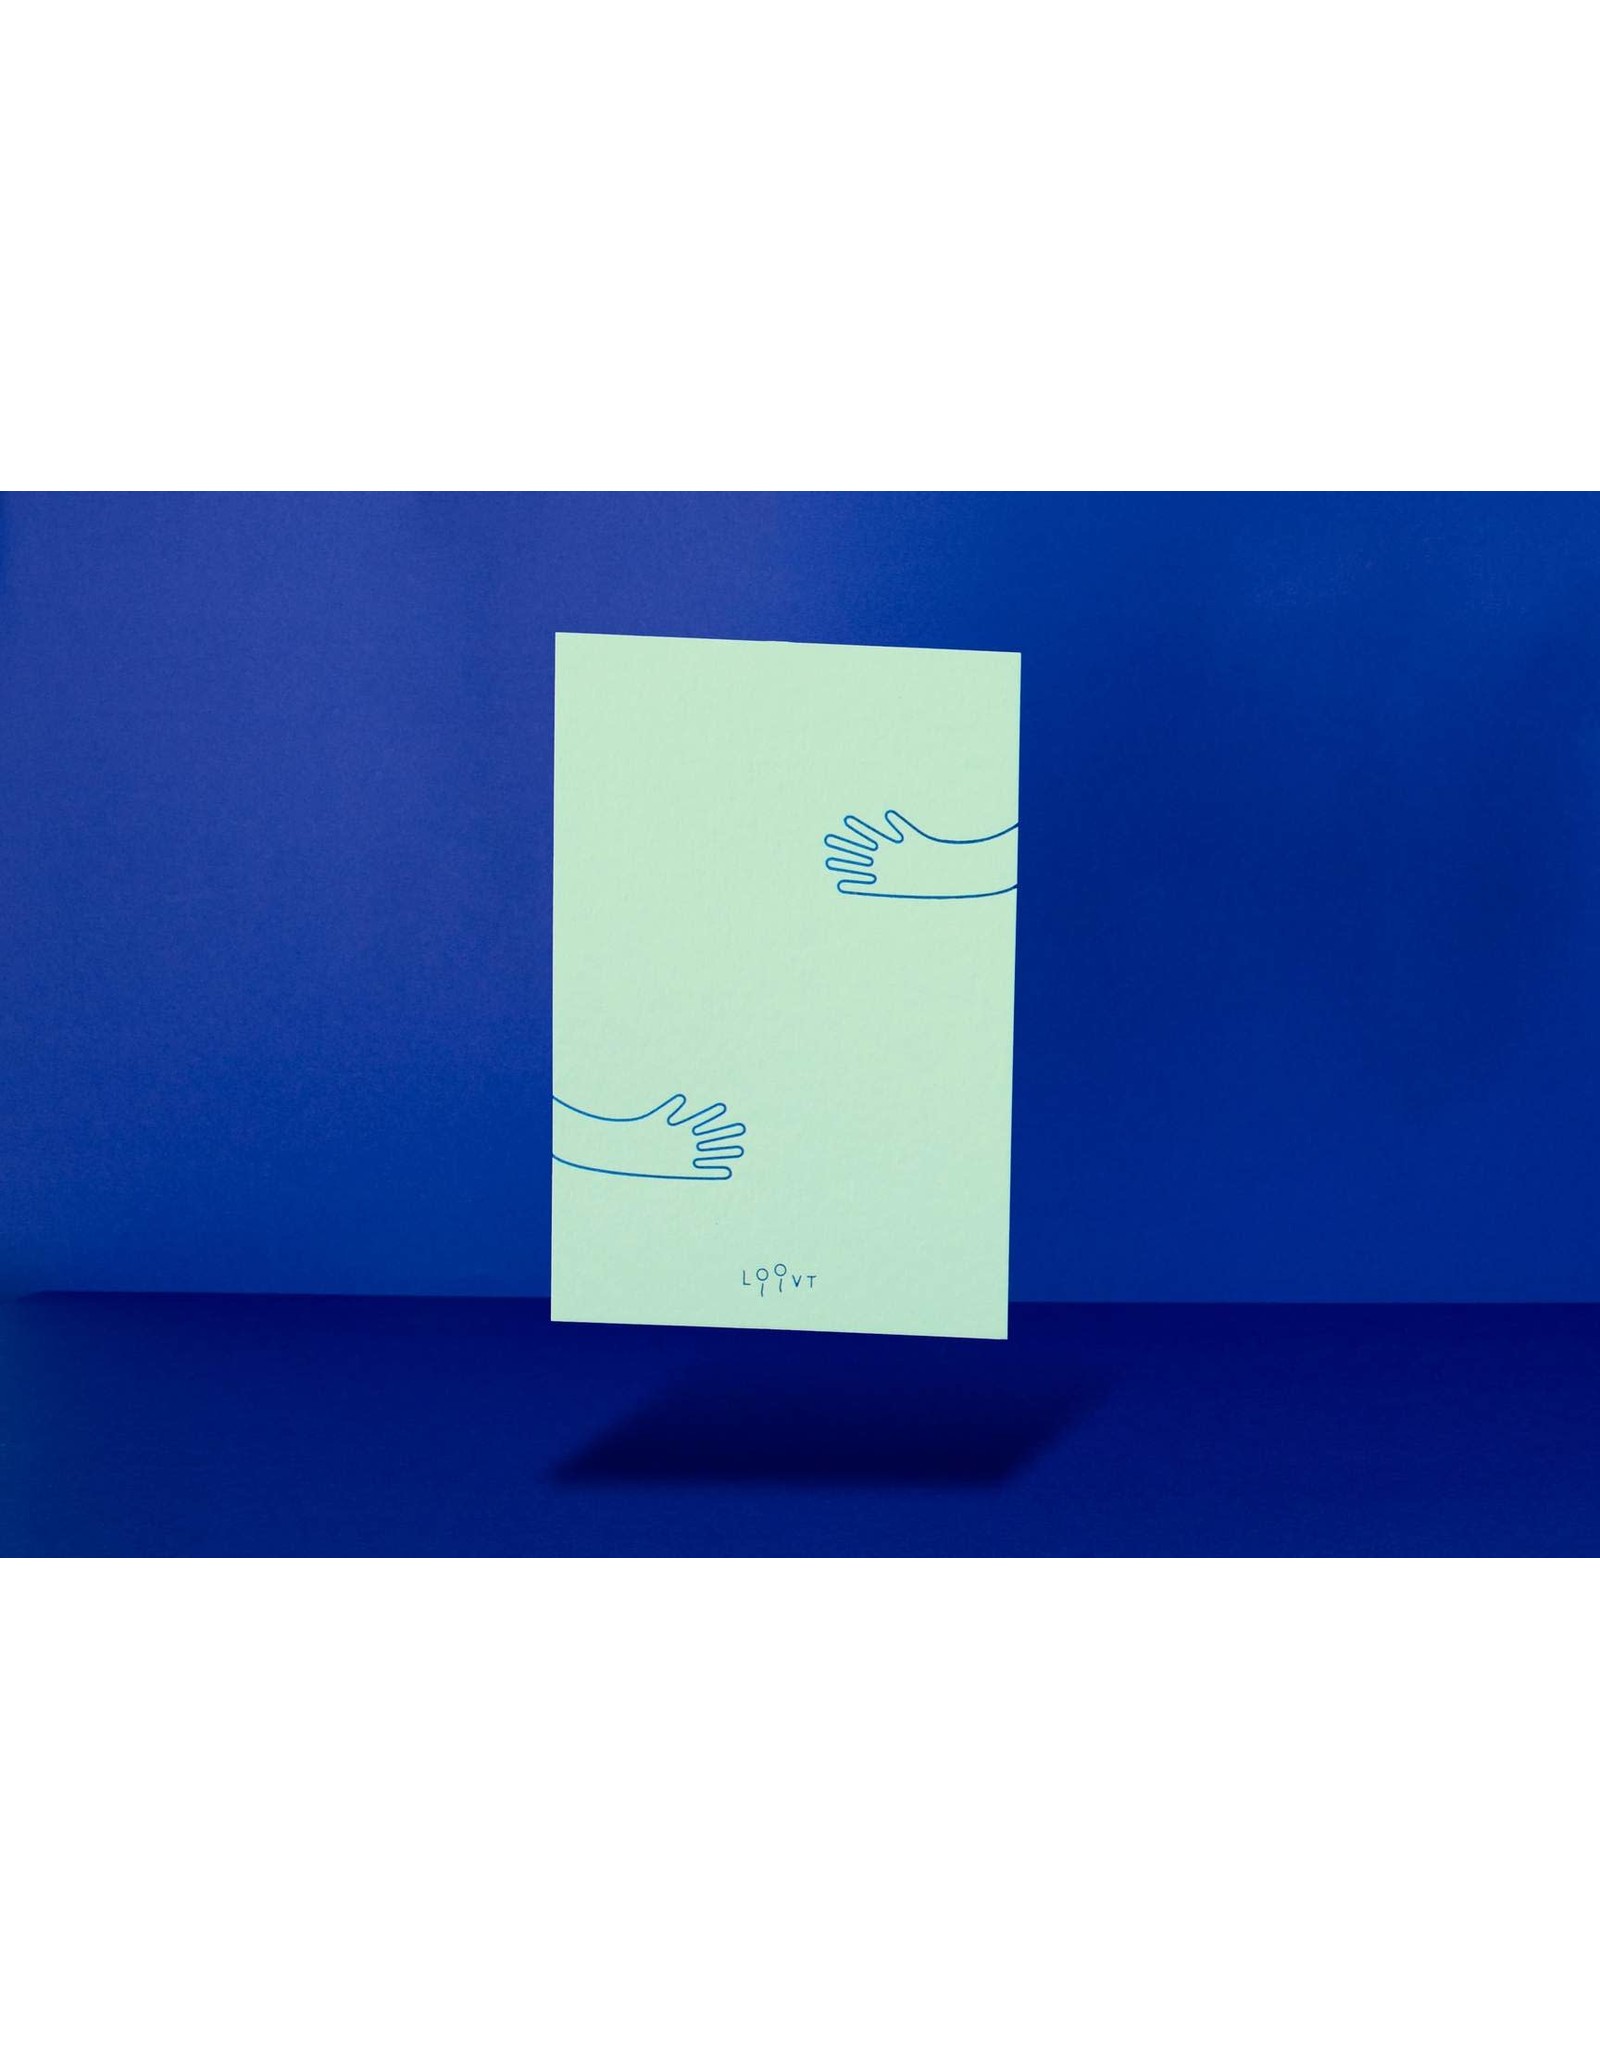 Loovt Wenskaart - Lifelines, Een Knuffel - Deluxe troostkaart Met foliedruk + enveloppe